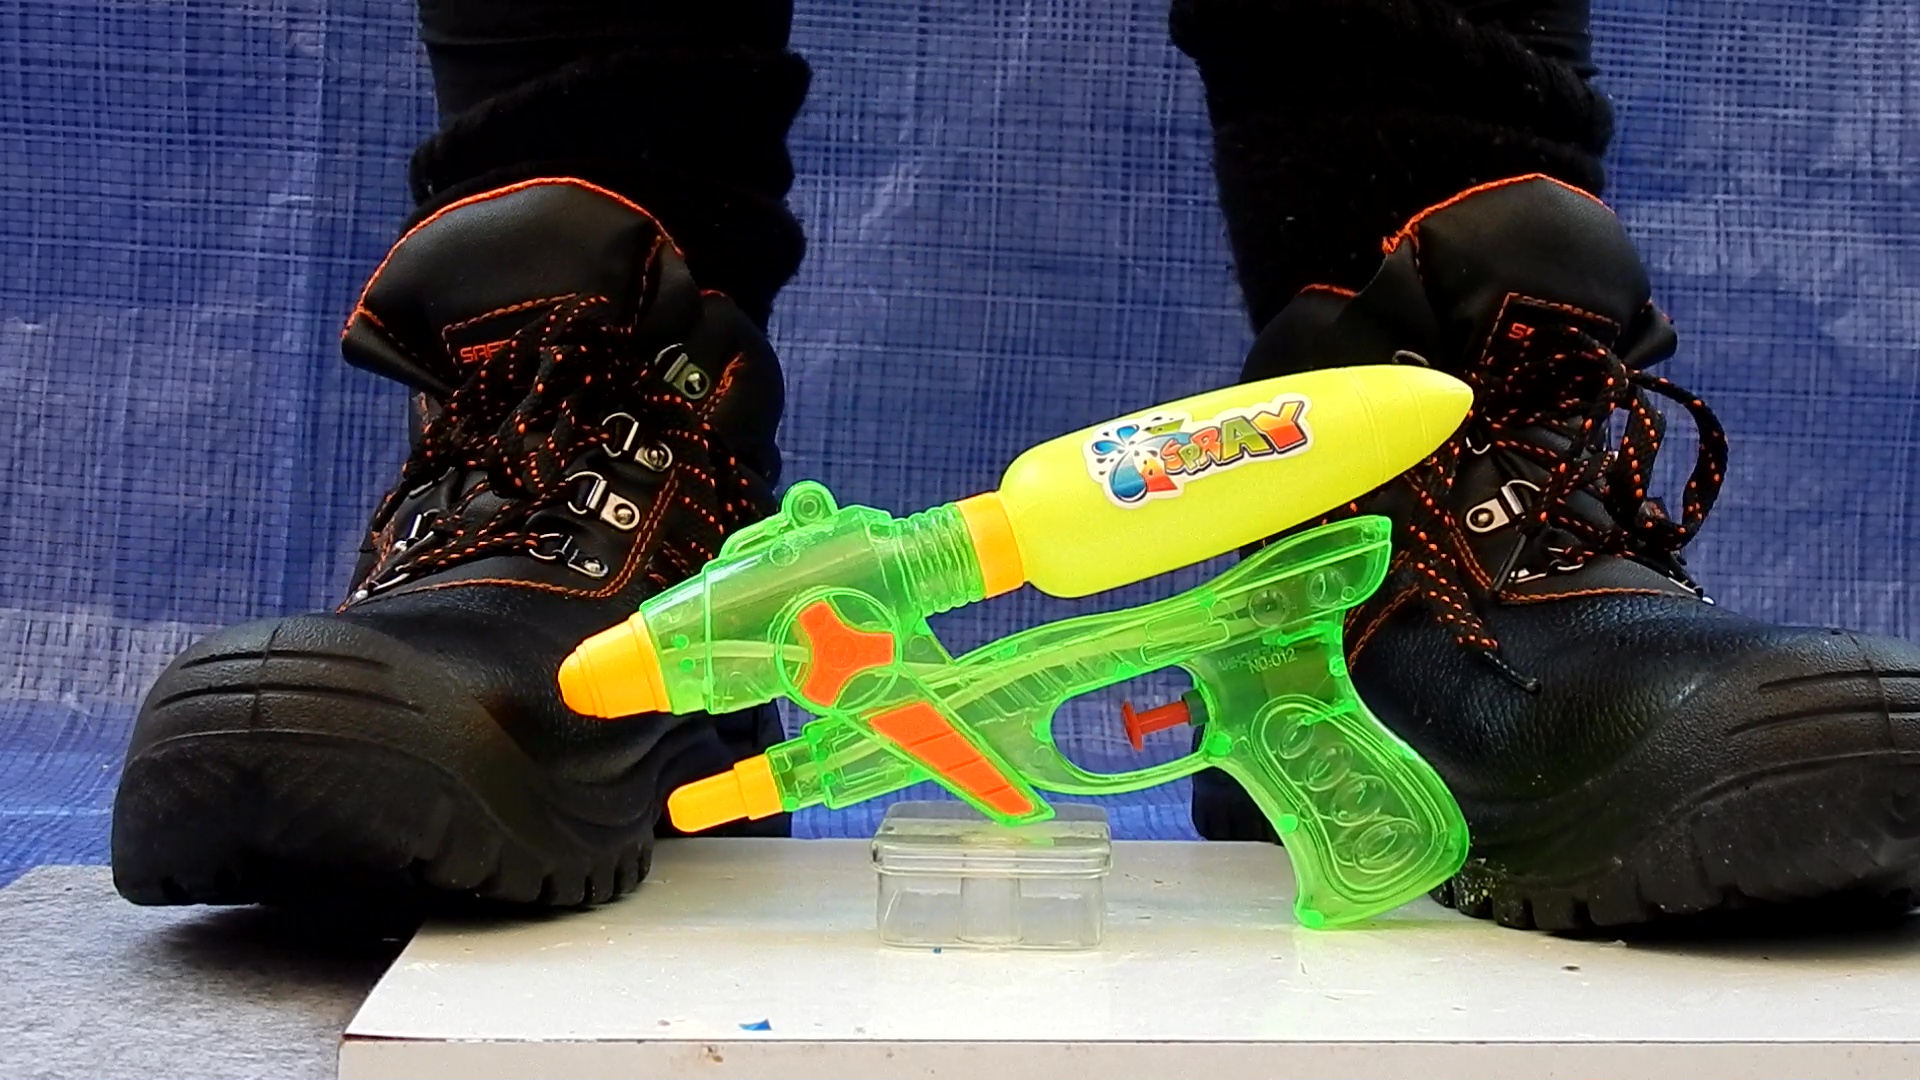 Crushing toy watergun with hard work boots